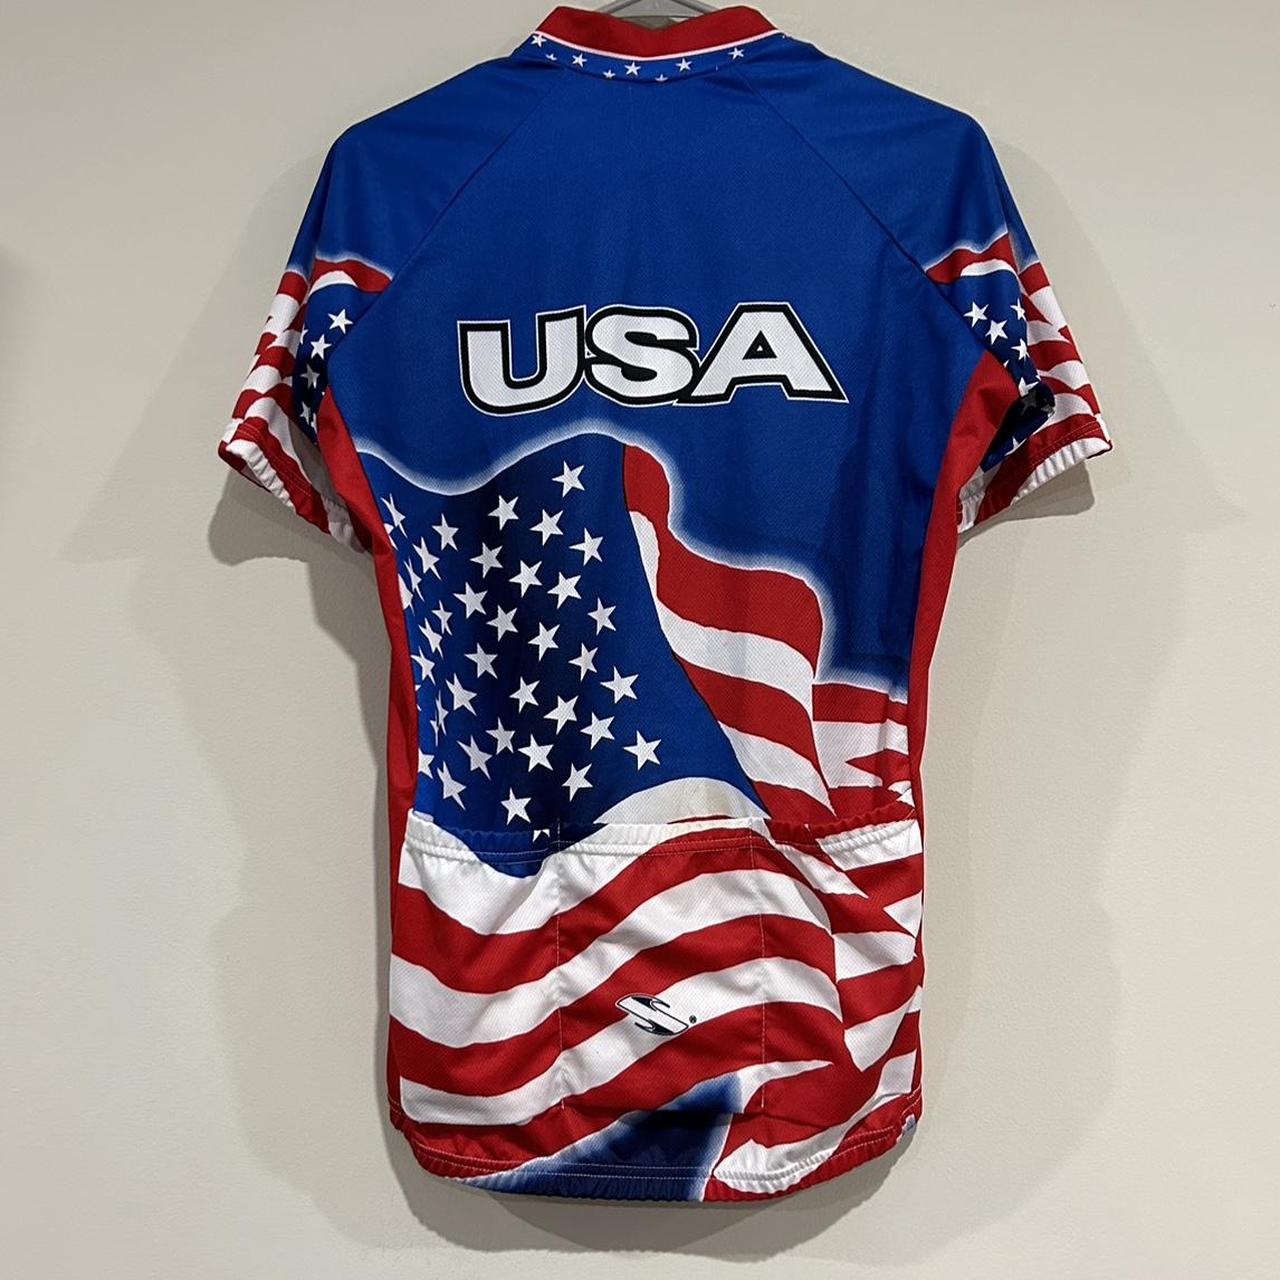 USA National Flag Team Men's Cycling Jerseys